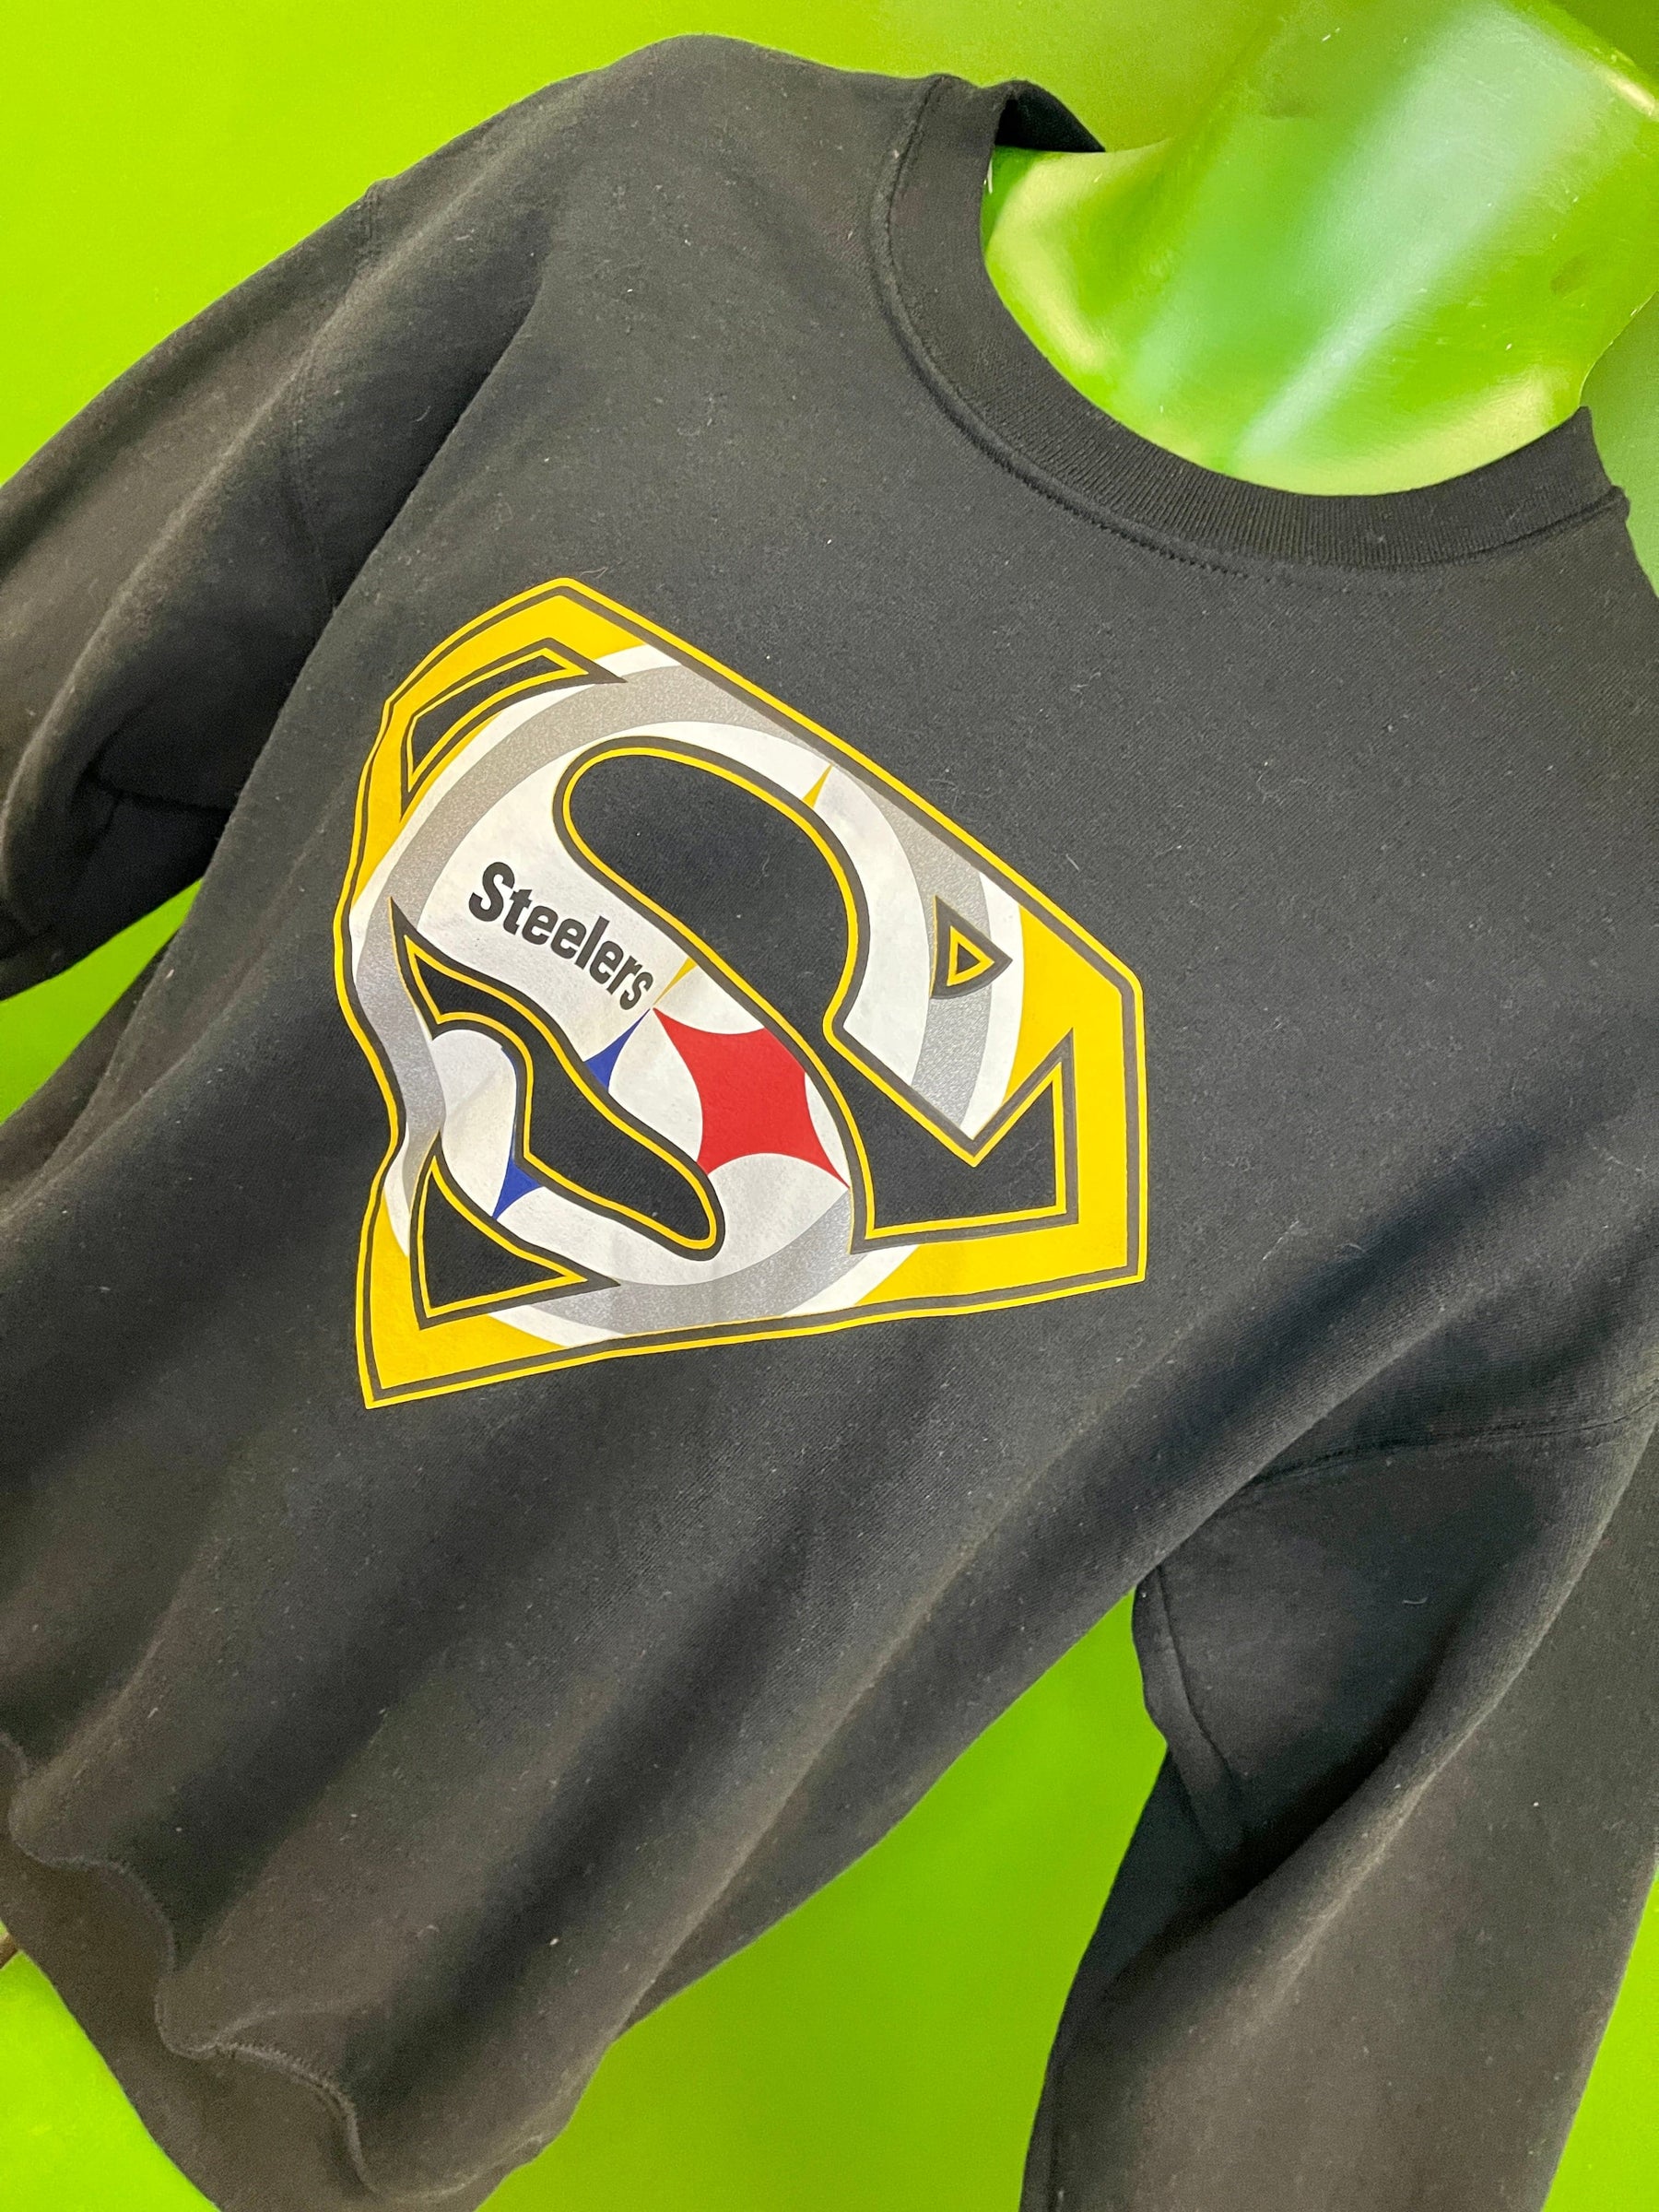 NFL Pittsburgh Steelers Custom Superman Logo Sweatshirt Men's Medium